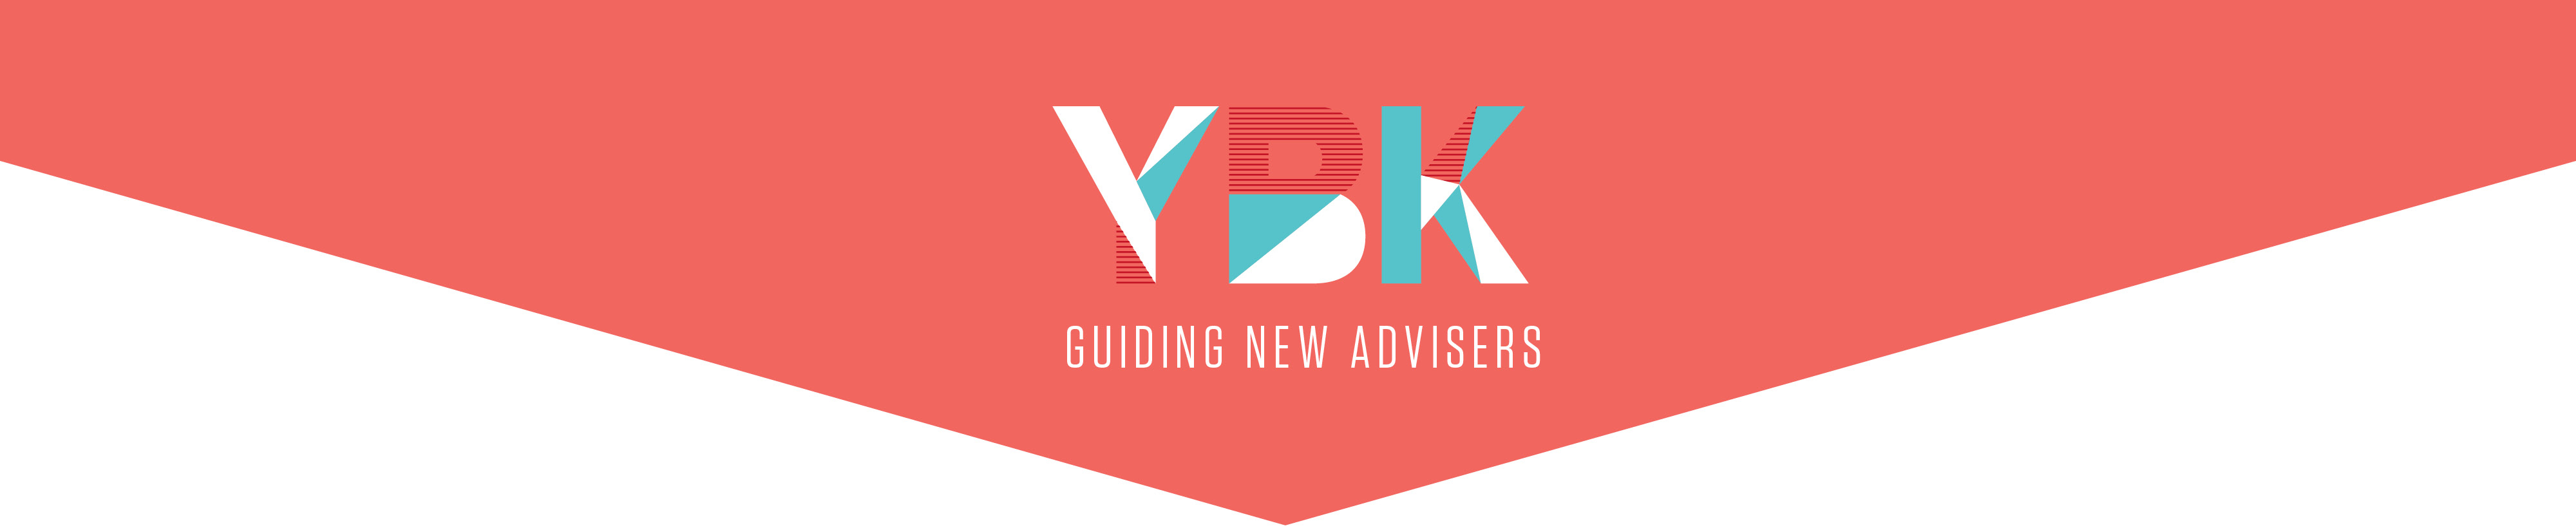 New-Advisers-Resources-Header